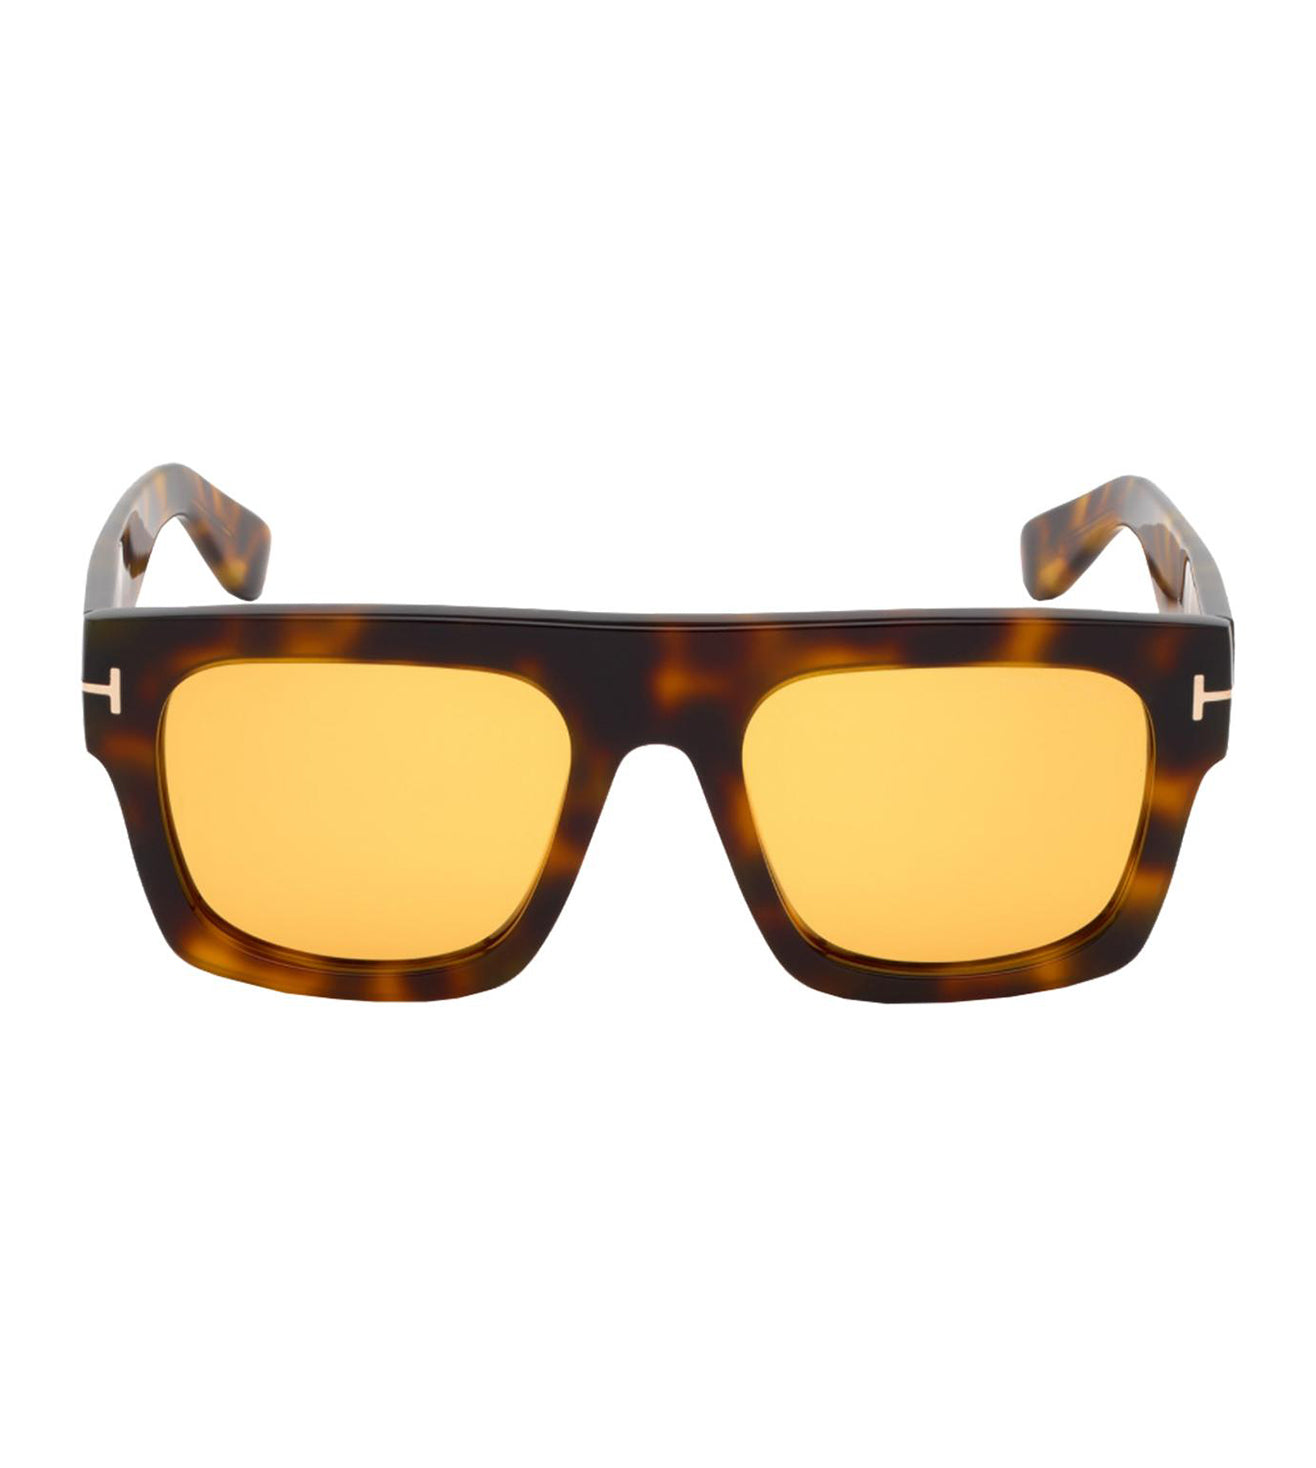 Tom Ford Men's Yellow Square Sunglasses